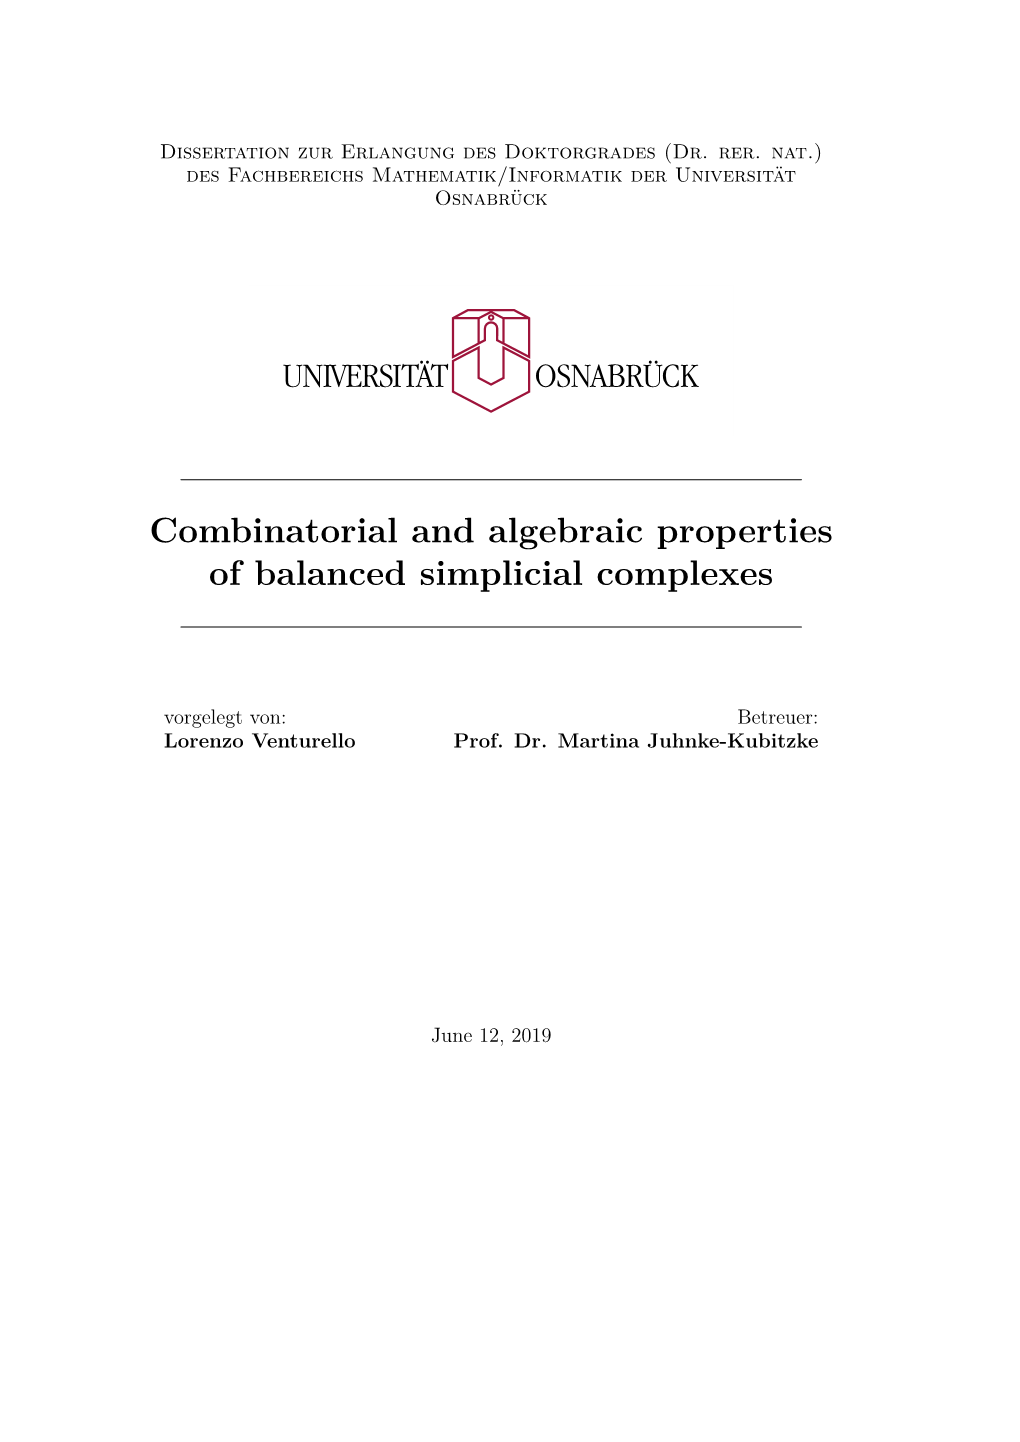 Combinatorial and Algebraic Properties of Balanced Simplicial Complexes